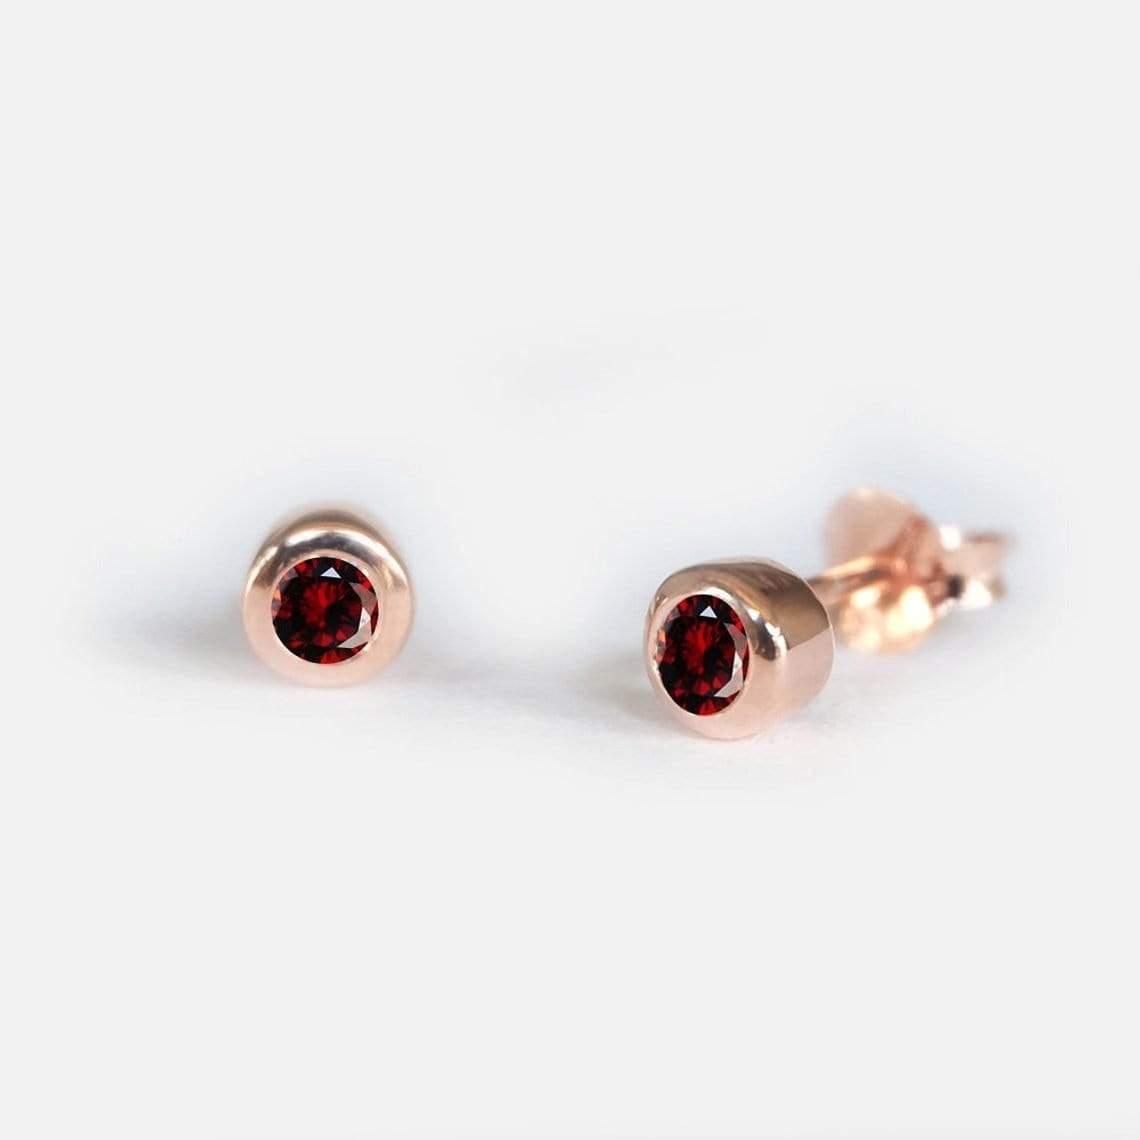 0.15 Carats 14k Solid Rose Gold Garnet Earrings - SOVATS